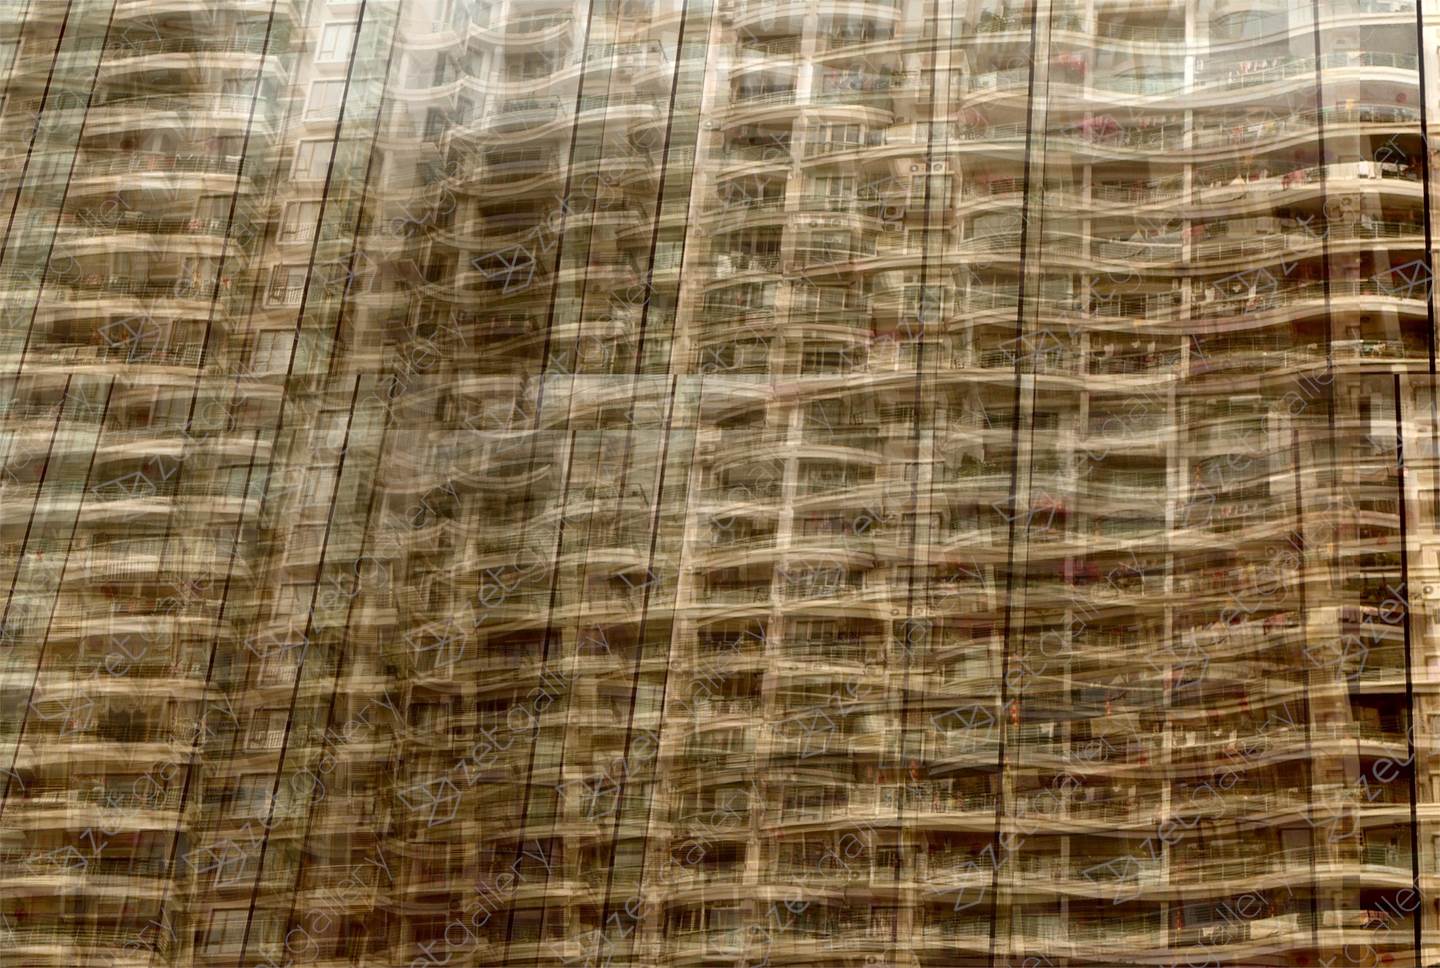 Shenzhen 2, Fotografia Digital Arquitetura original por John Brooks